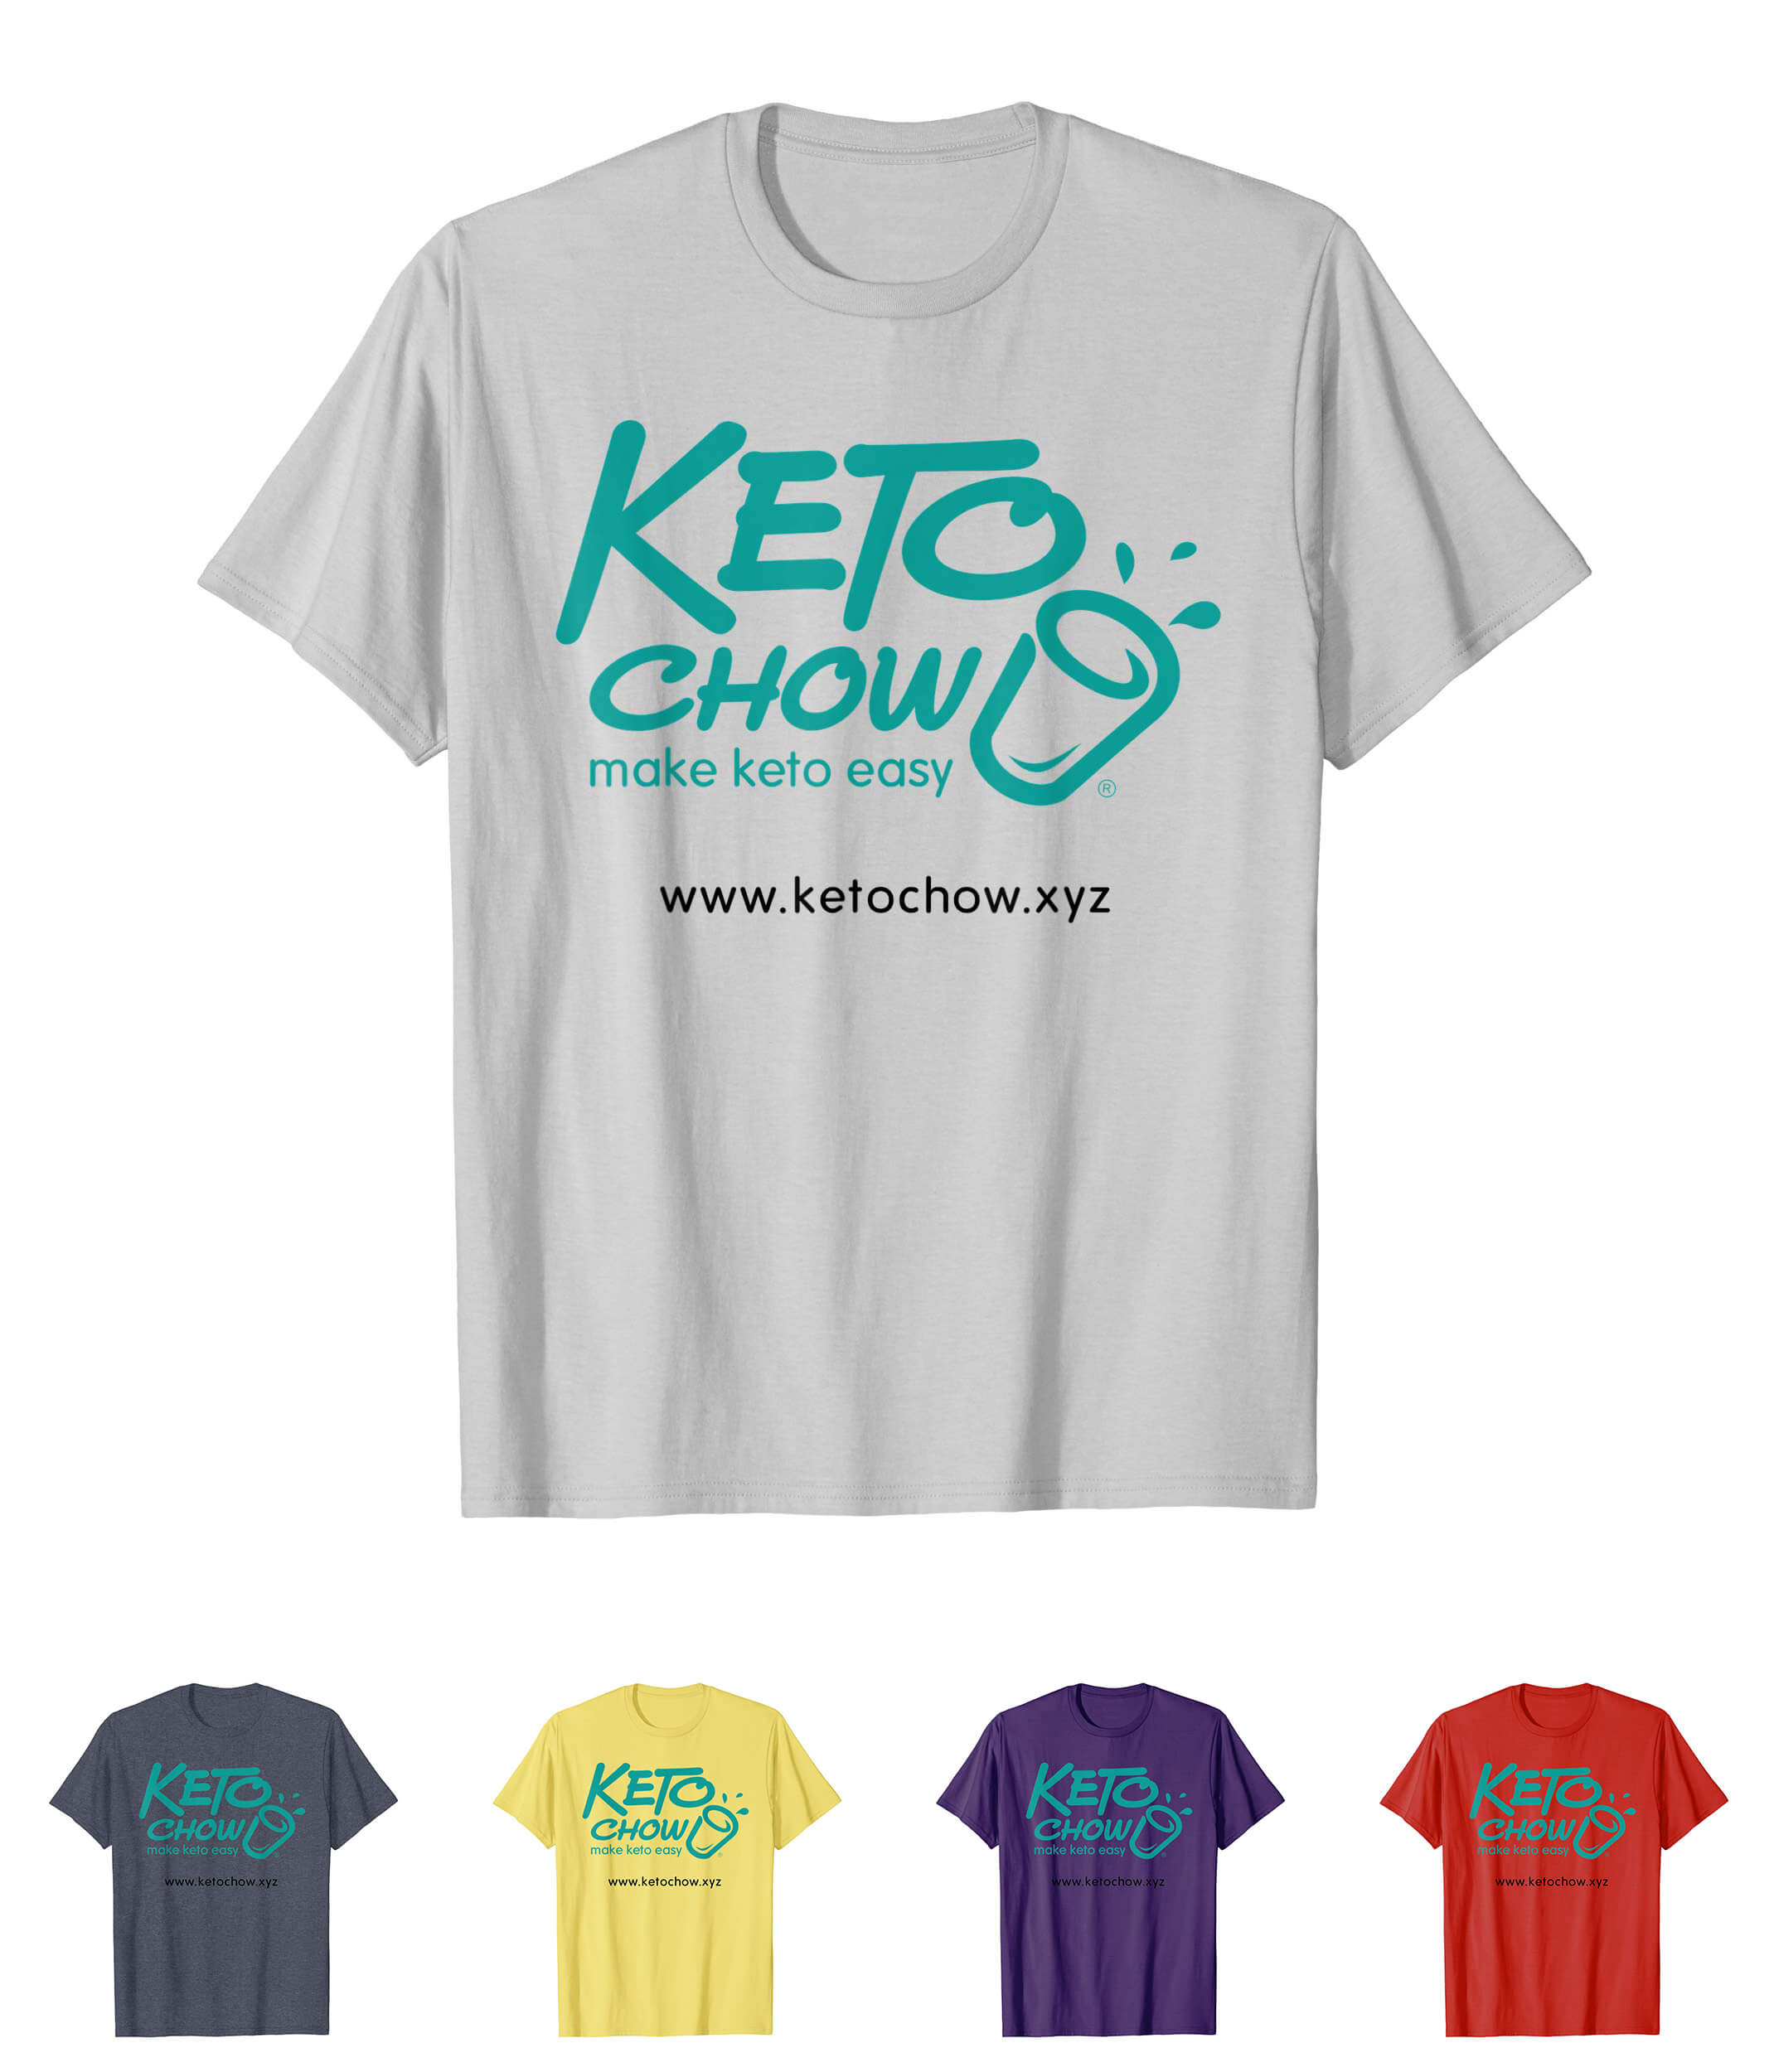 Keto Chow teal logo bright colors t-shirt